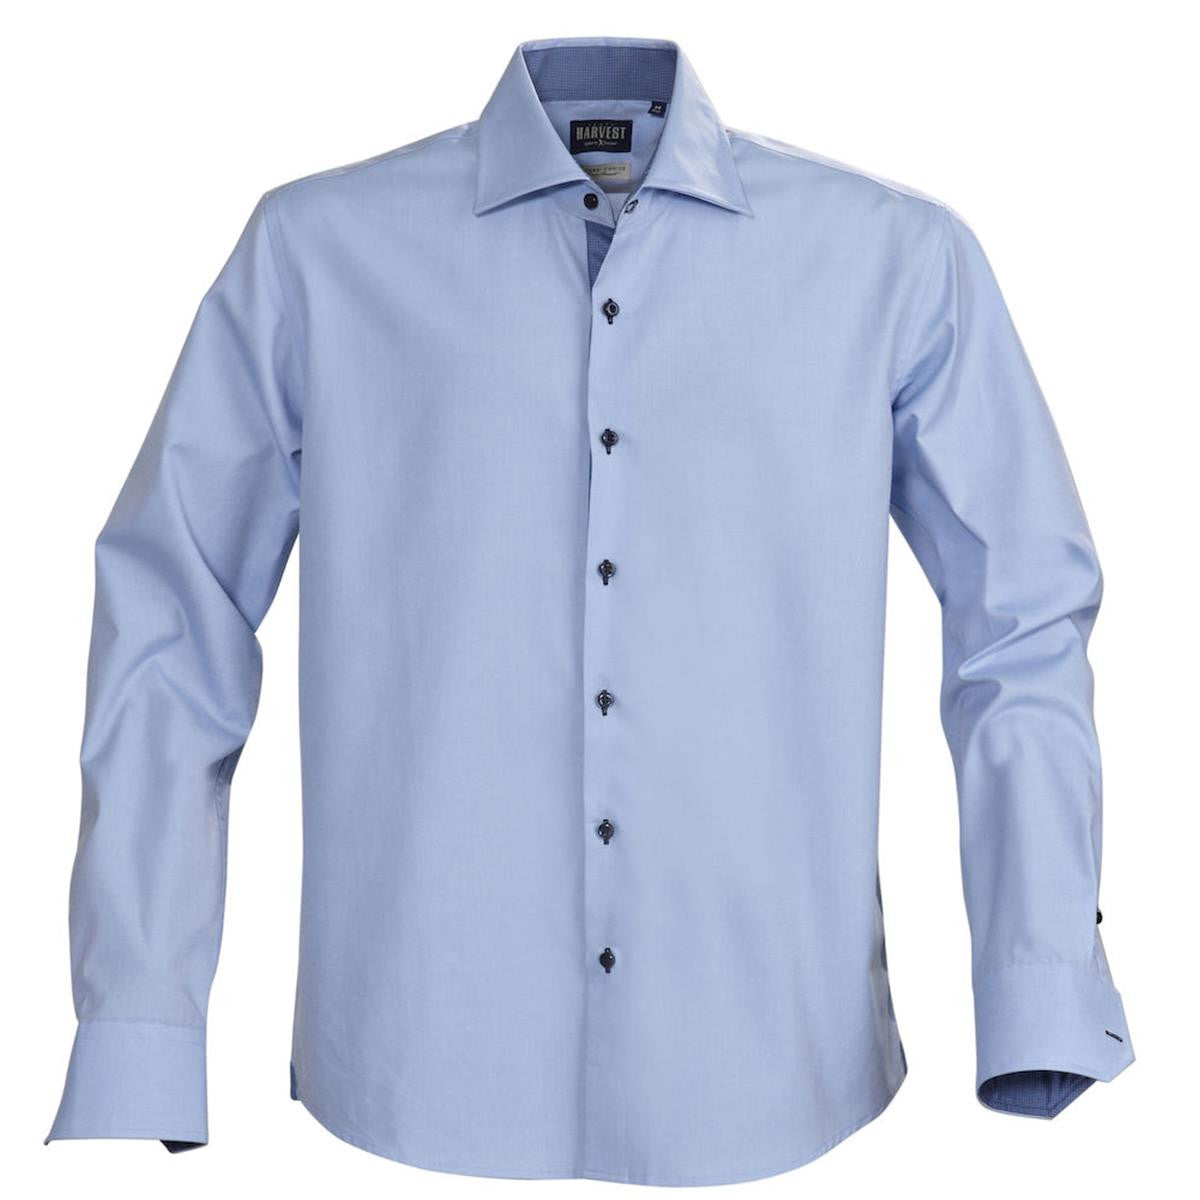 Baltimore Men's 100% Cotton Long Sleeve Shirt